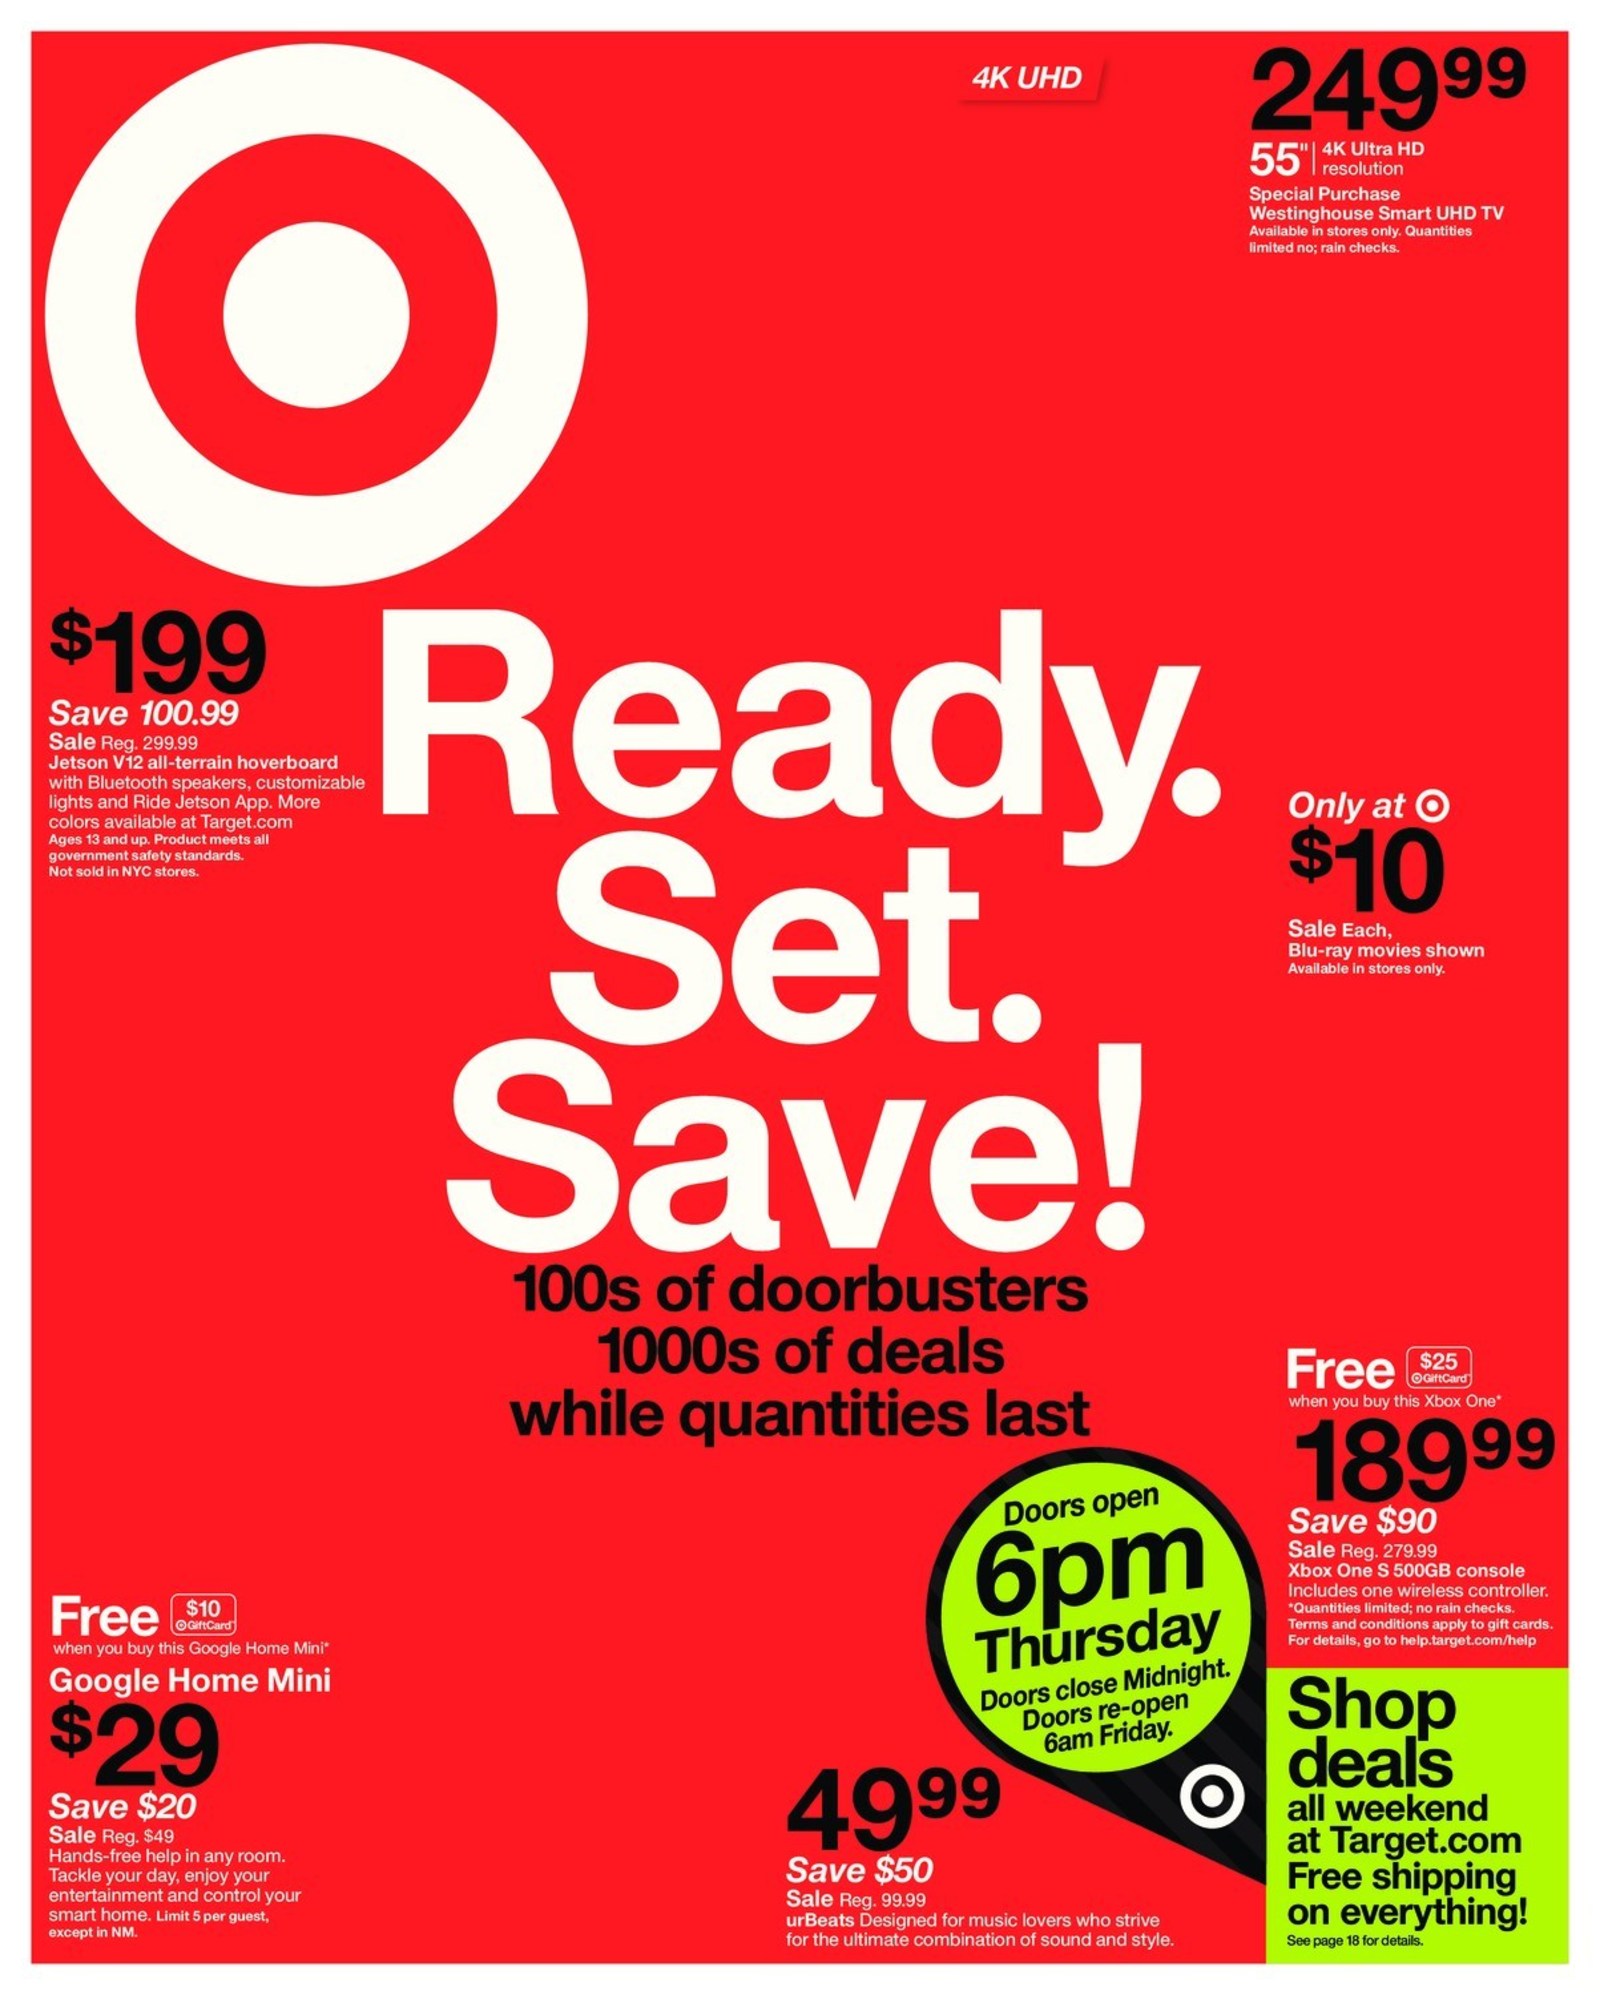 Target Reveals Deep Black Friday Discounts